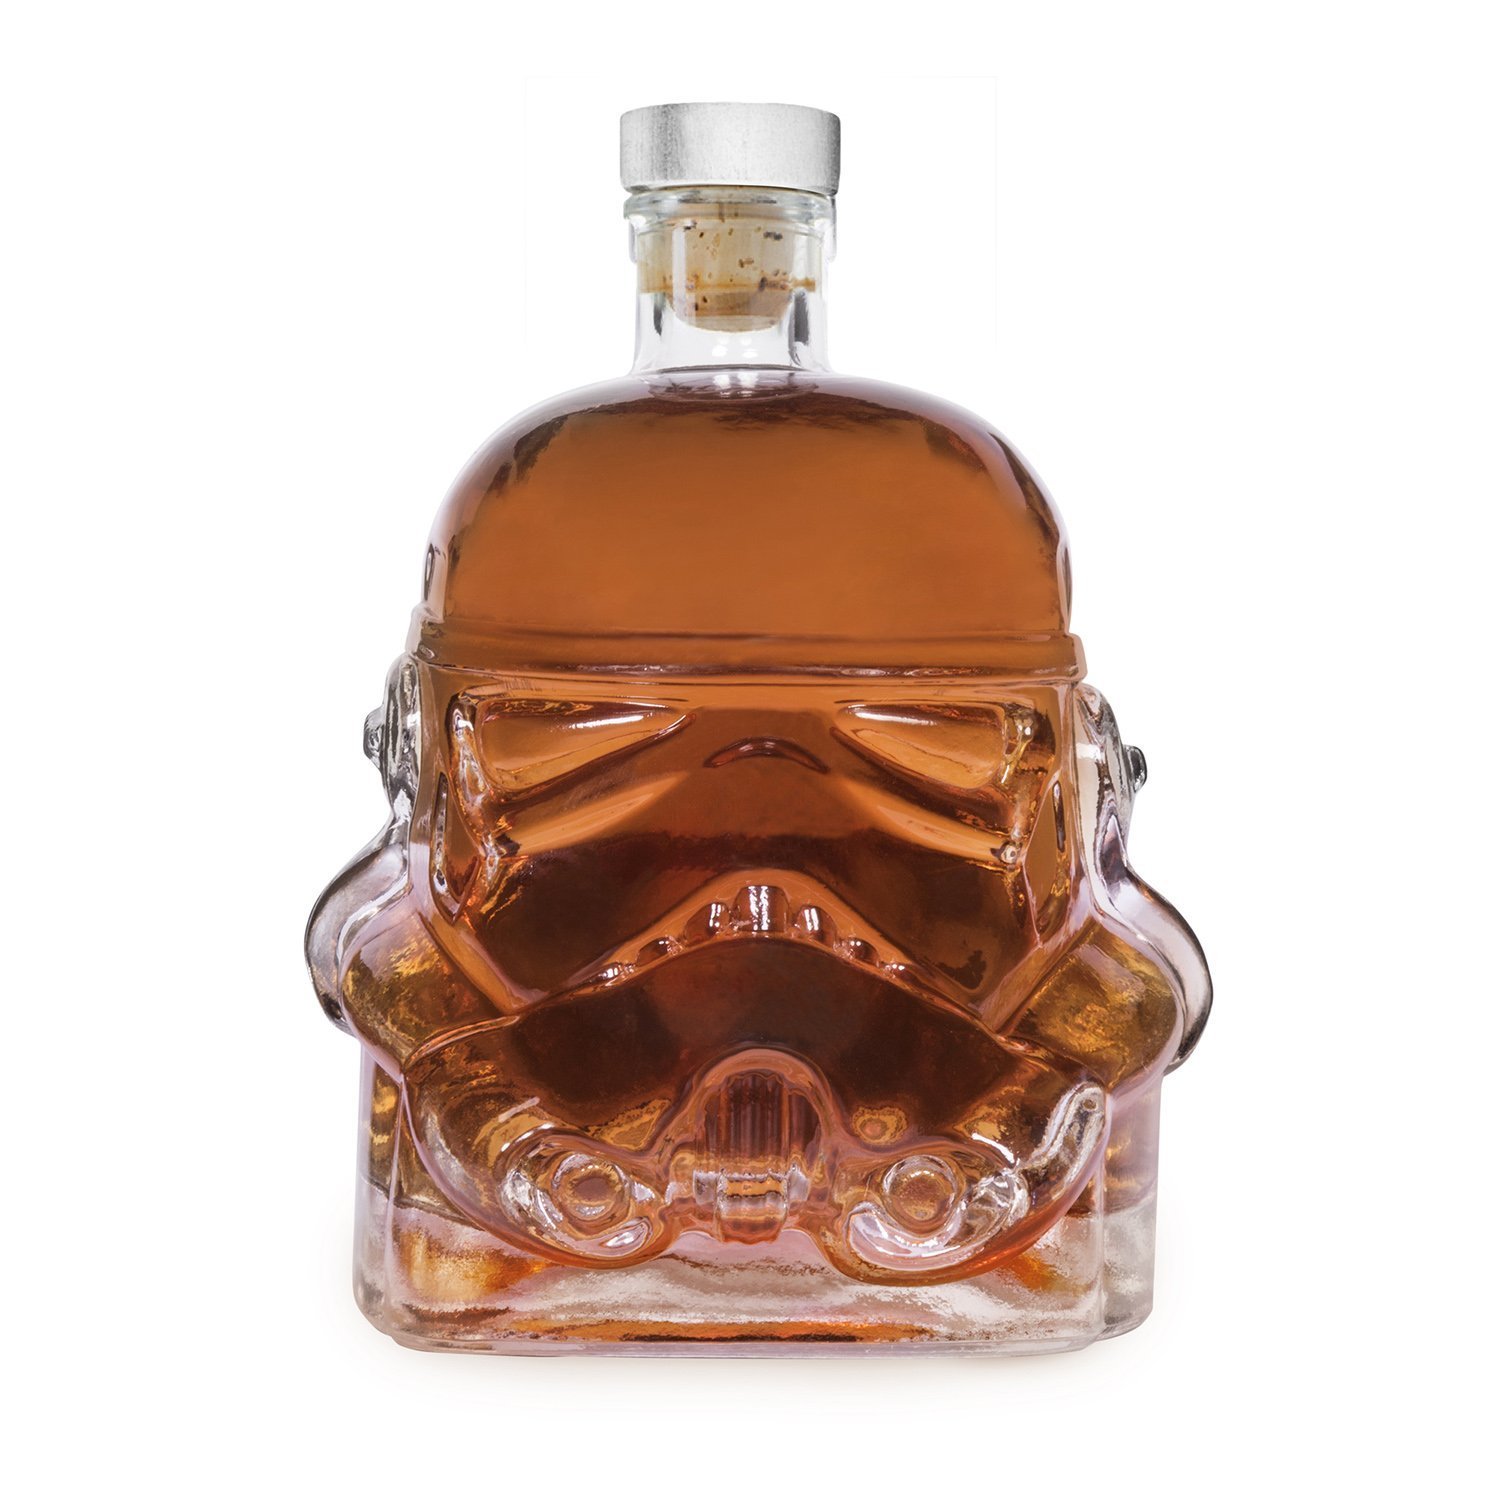 Star Wars Stormtrooper Whisky Bottle - What The Shock?!